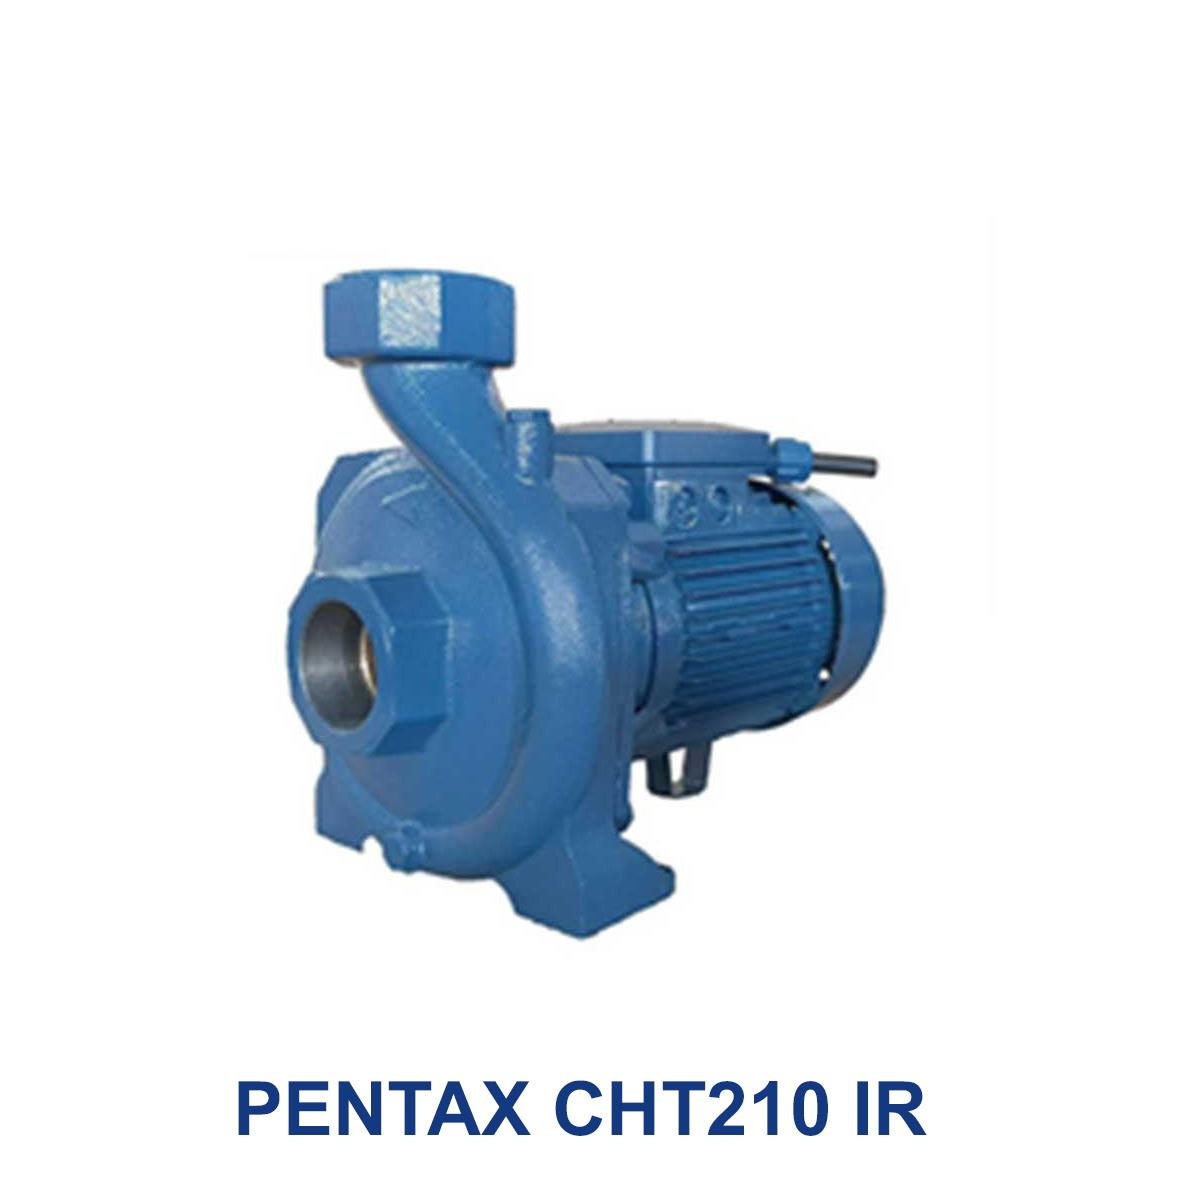 PENTAX-CHT210-IR